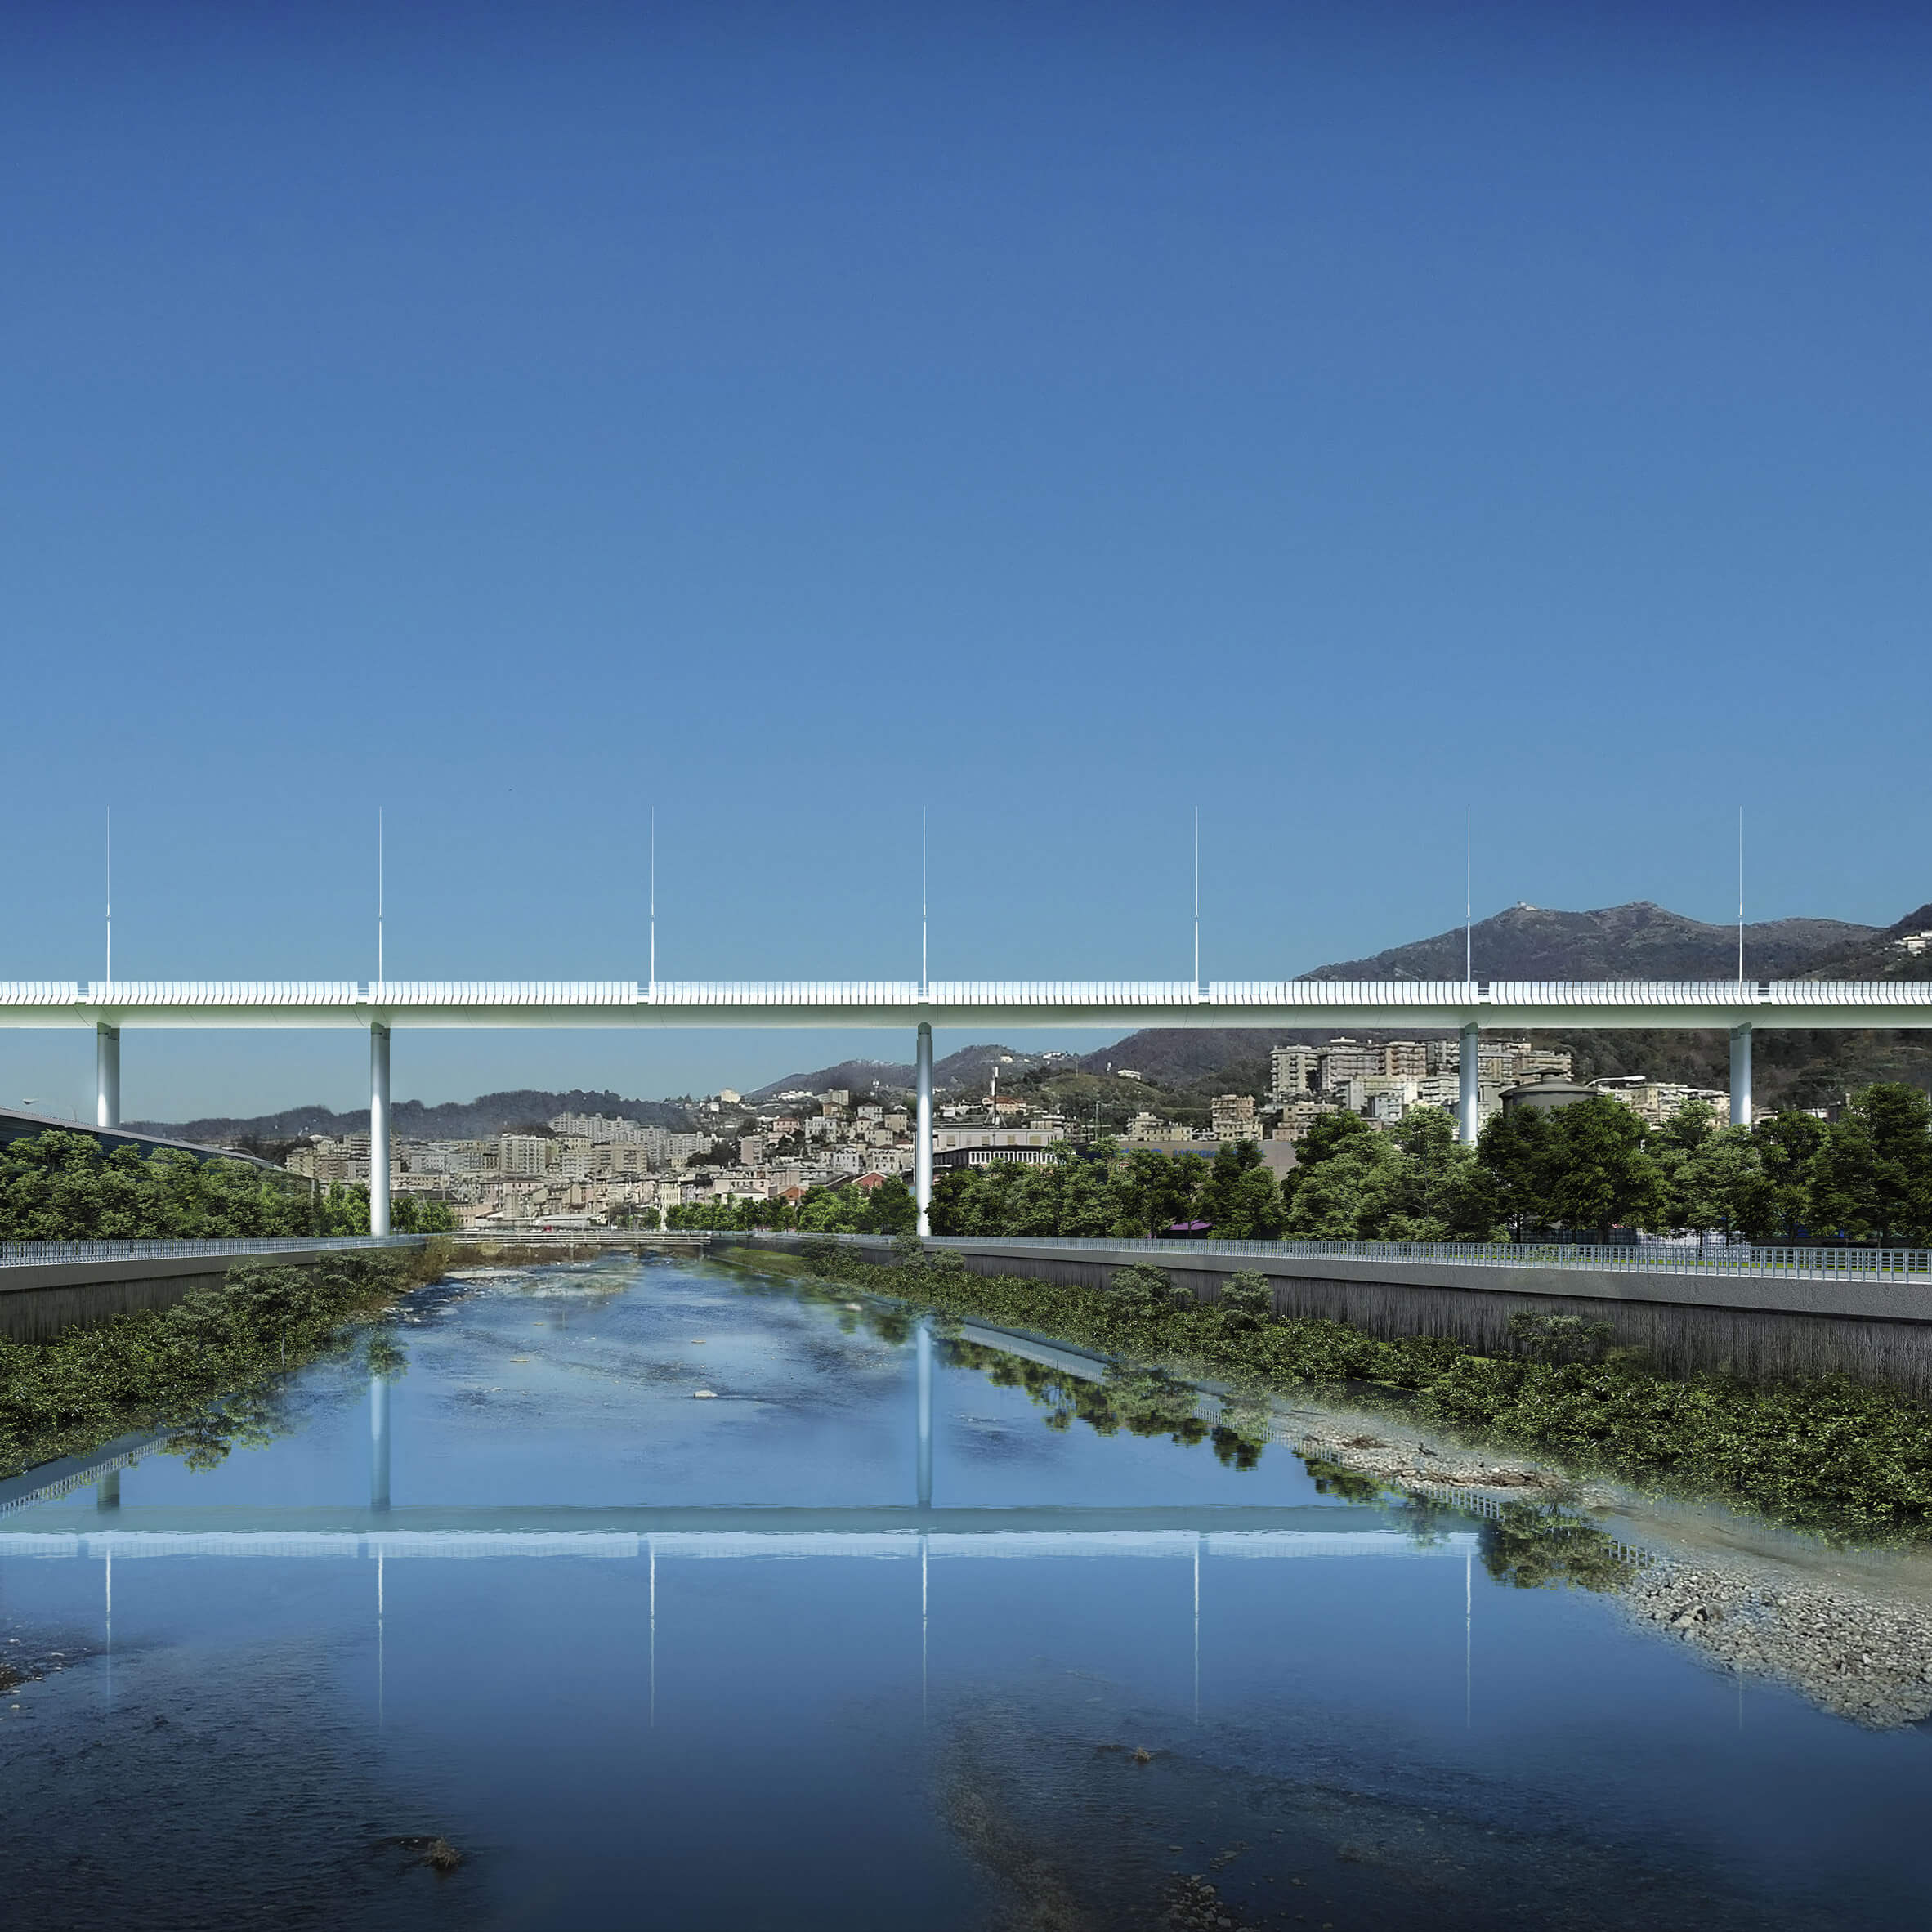 Renzo Piano bridge